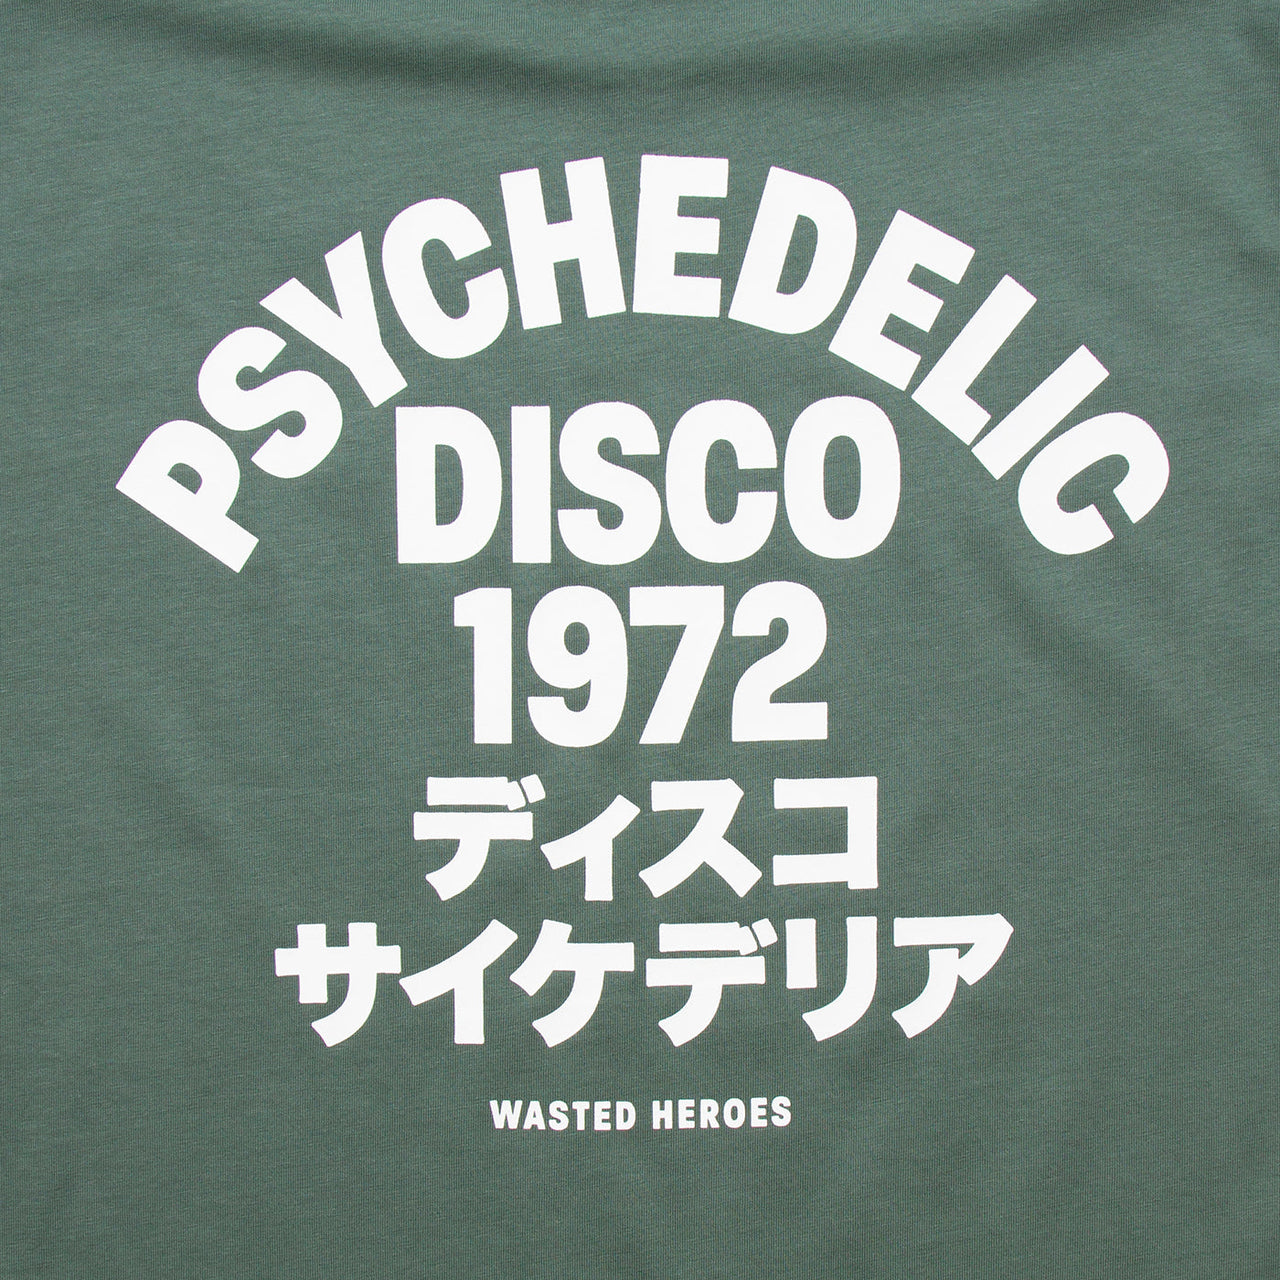 1972 Psychedelic Disco Back Print - Heavy Tshirt - Green